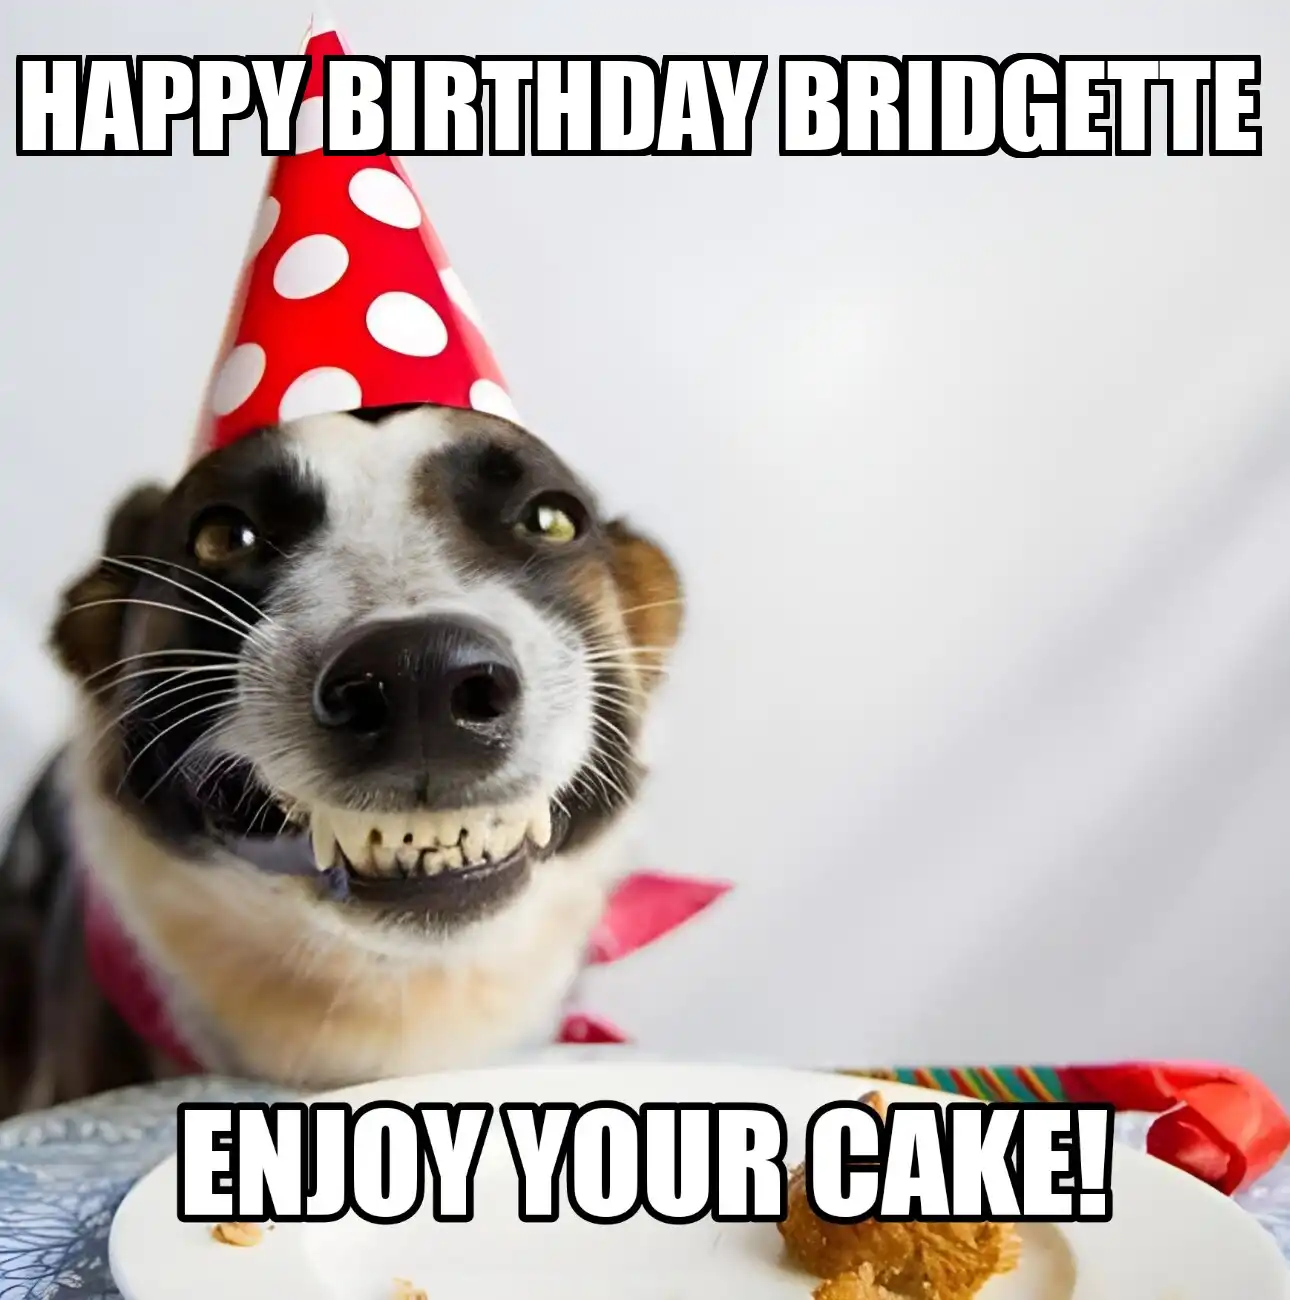 Happy Birthday Bridgette Enjoy Your Cake Dog Meme